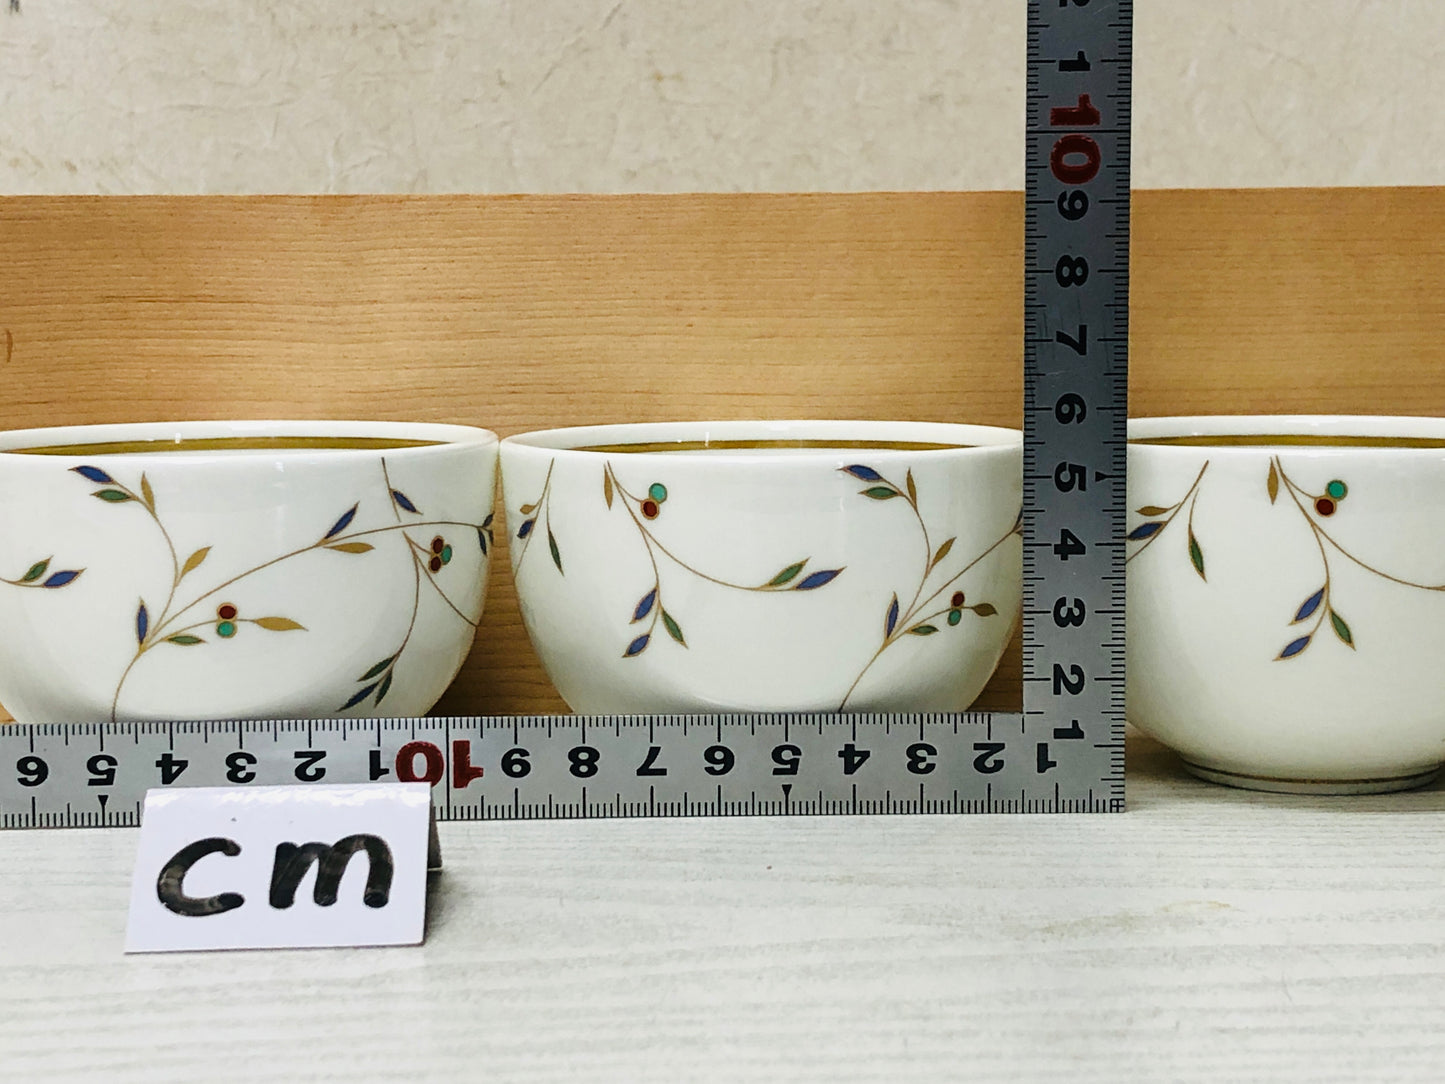 Y2967 YUNOMI Narumi Touki cup signed box Japanese tea bowl pottery antique